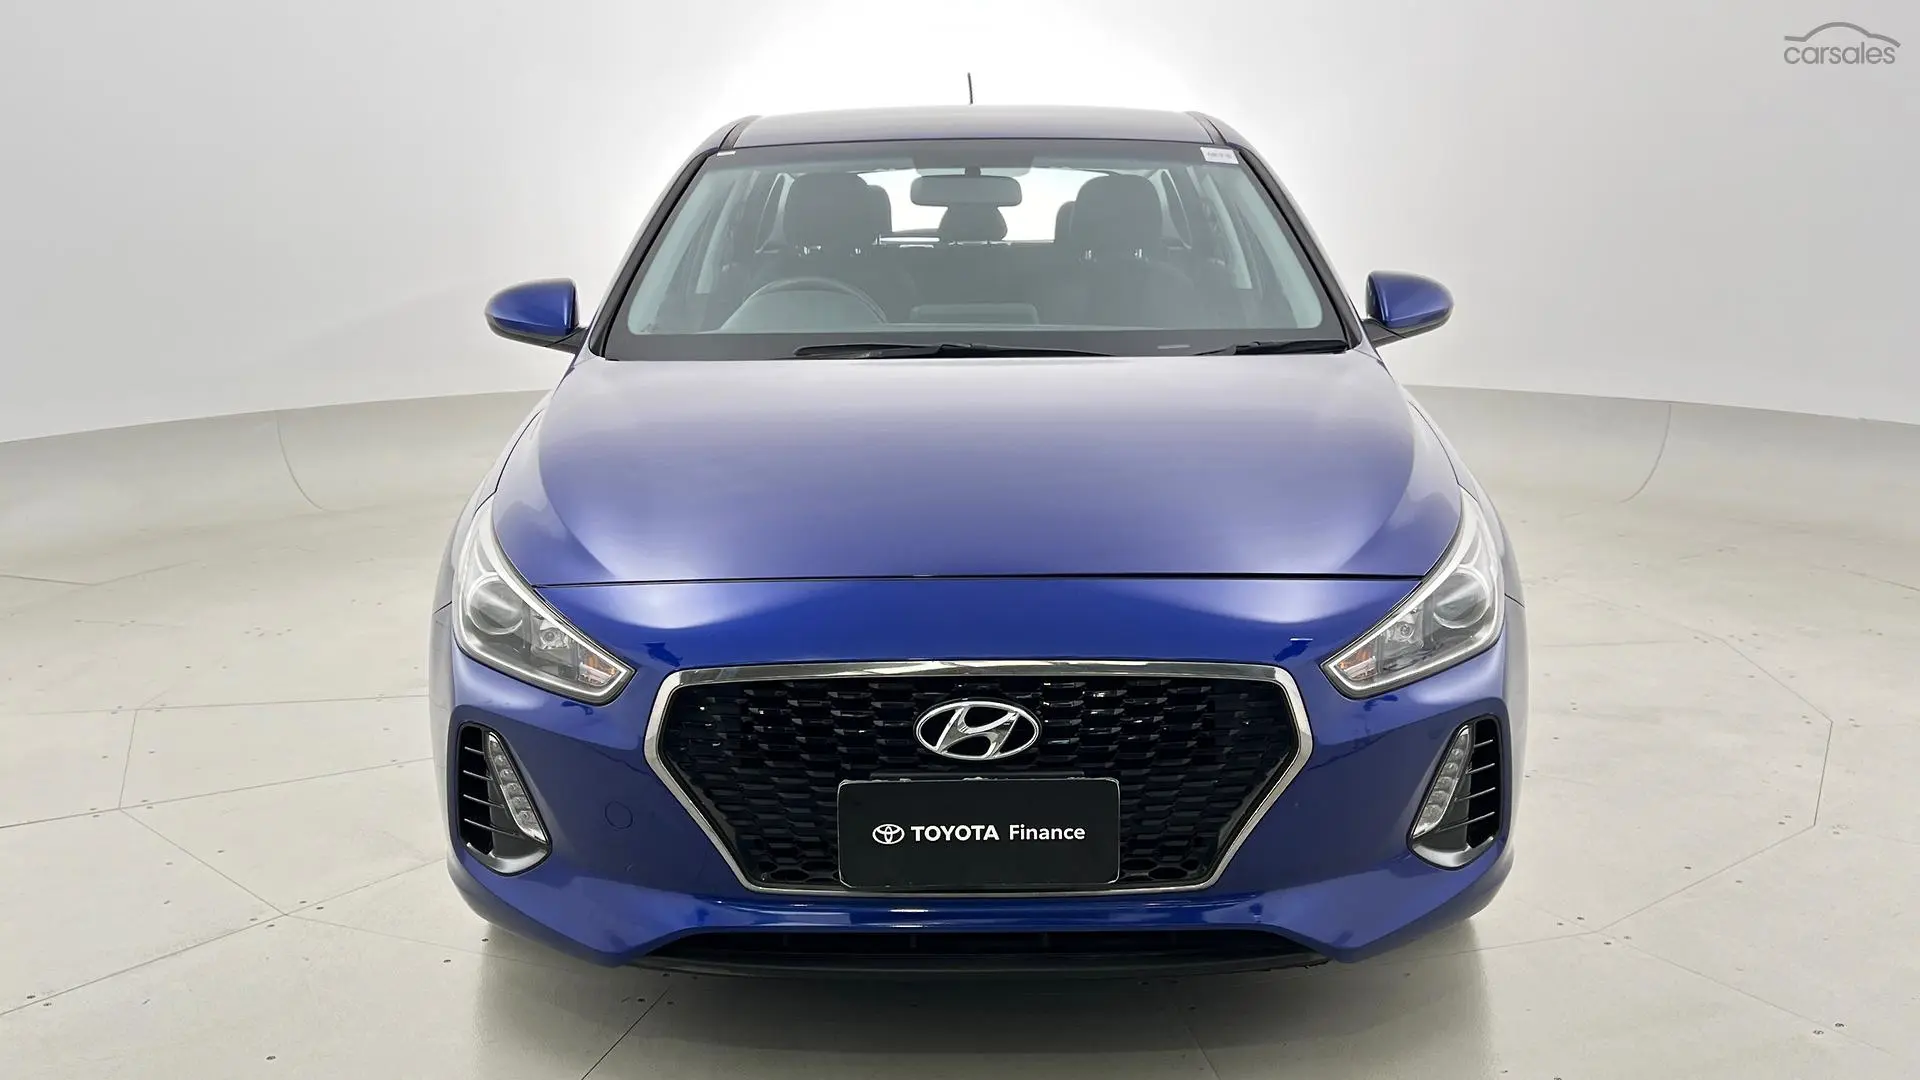 2019 Hyundai i30 Image 9